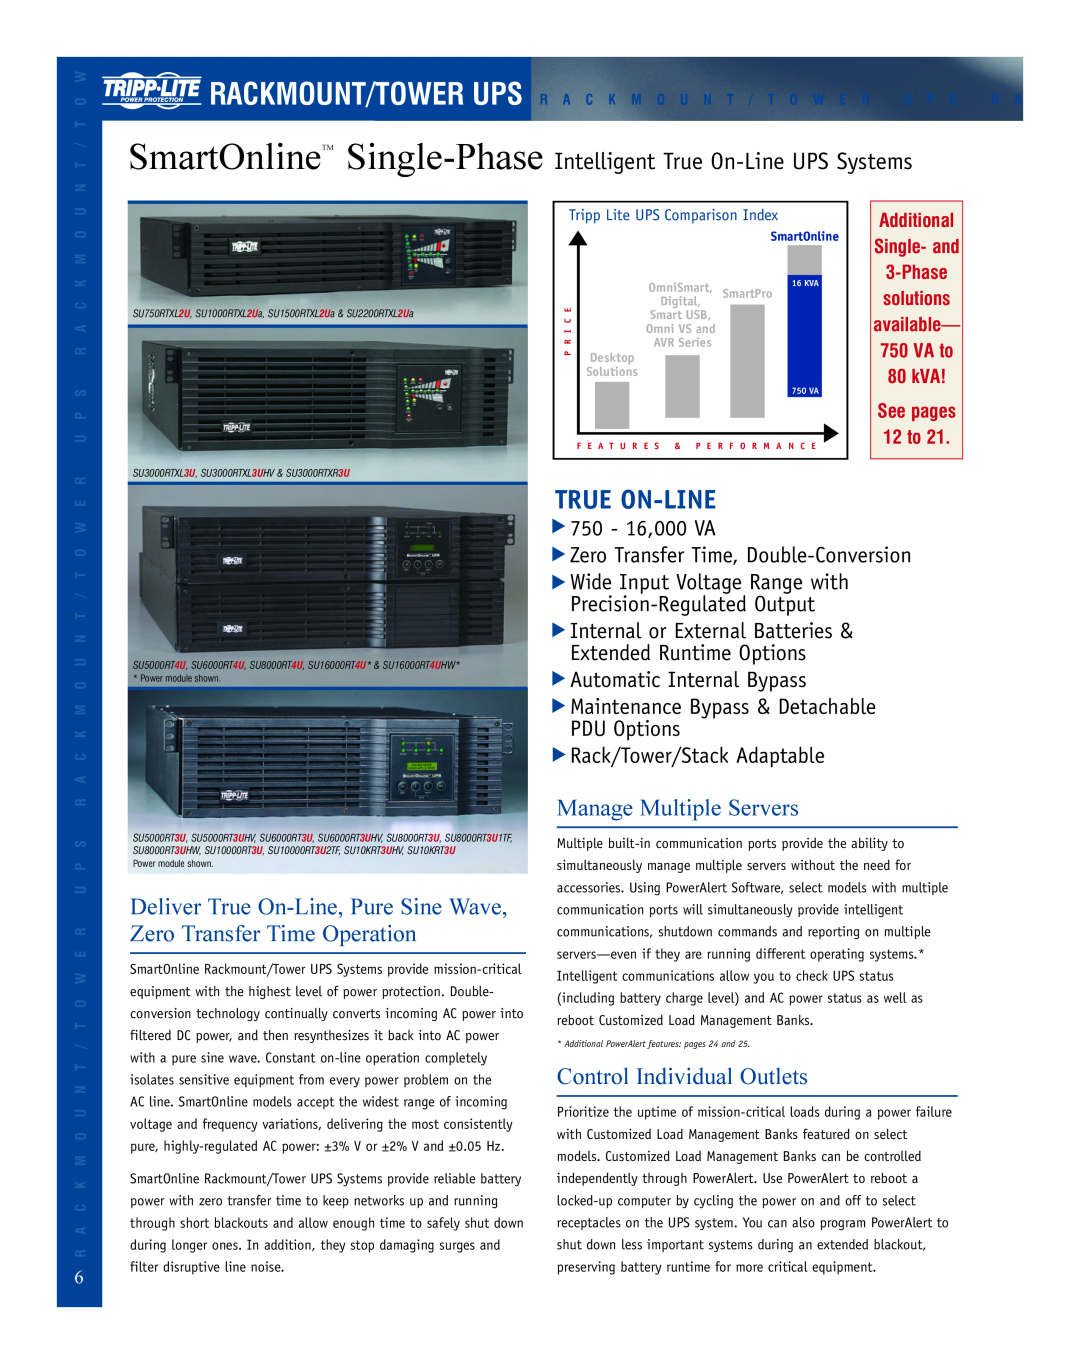 Tripp Lite ENVIROSENSE brochure Manage Multiple Servers, Control Individual Outlets, True On-Line, 750 - 16,000 VA, 80 kVA 